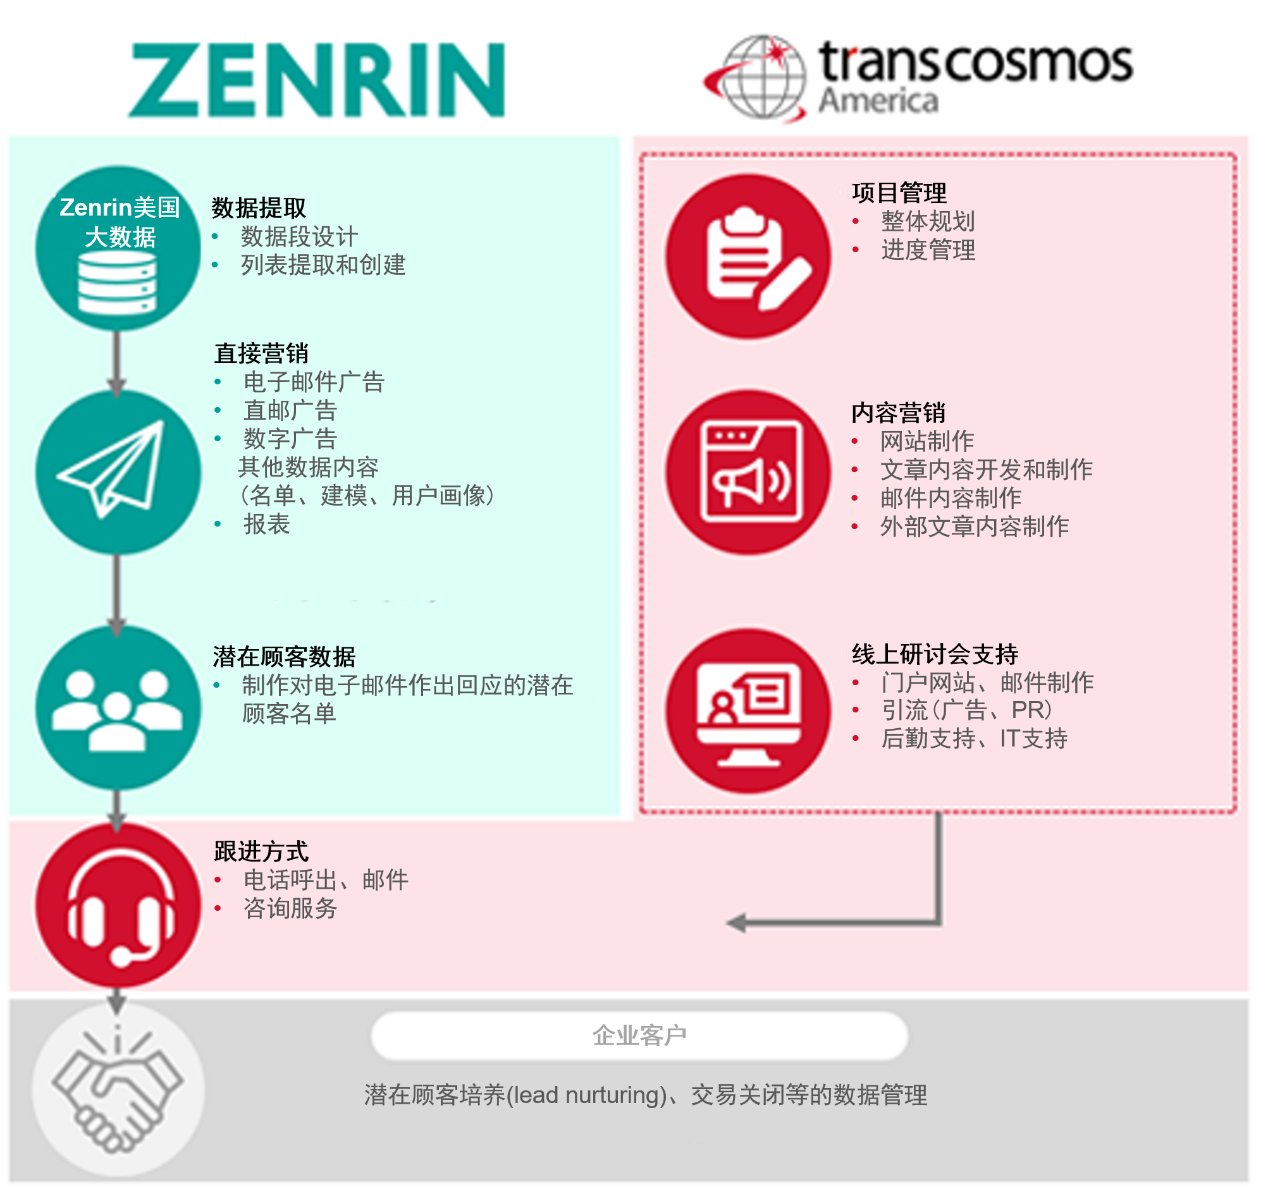 transcosmos美国与Zenrin美国合作推出基于大数据的销售支持服务